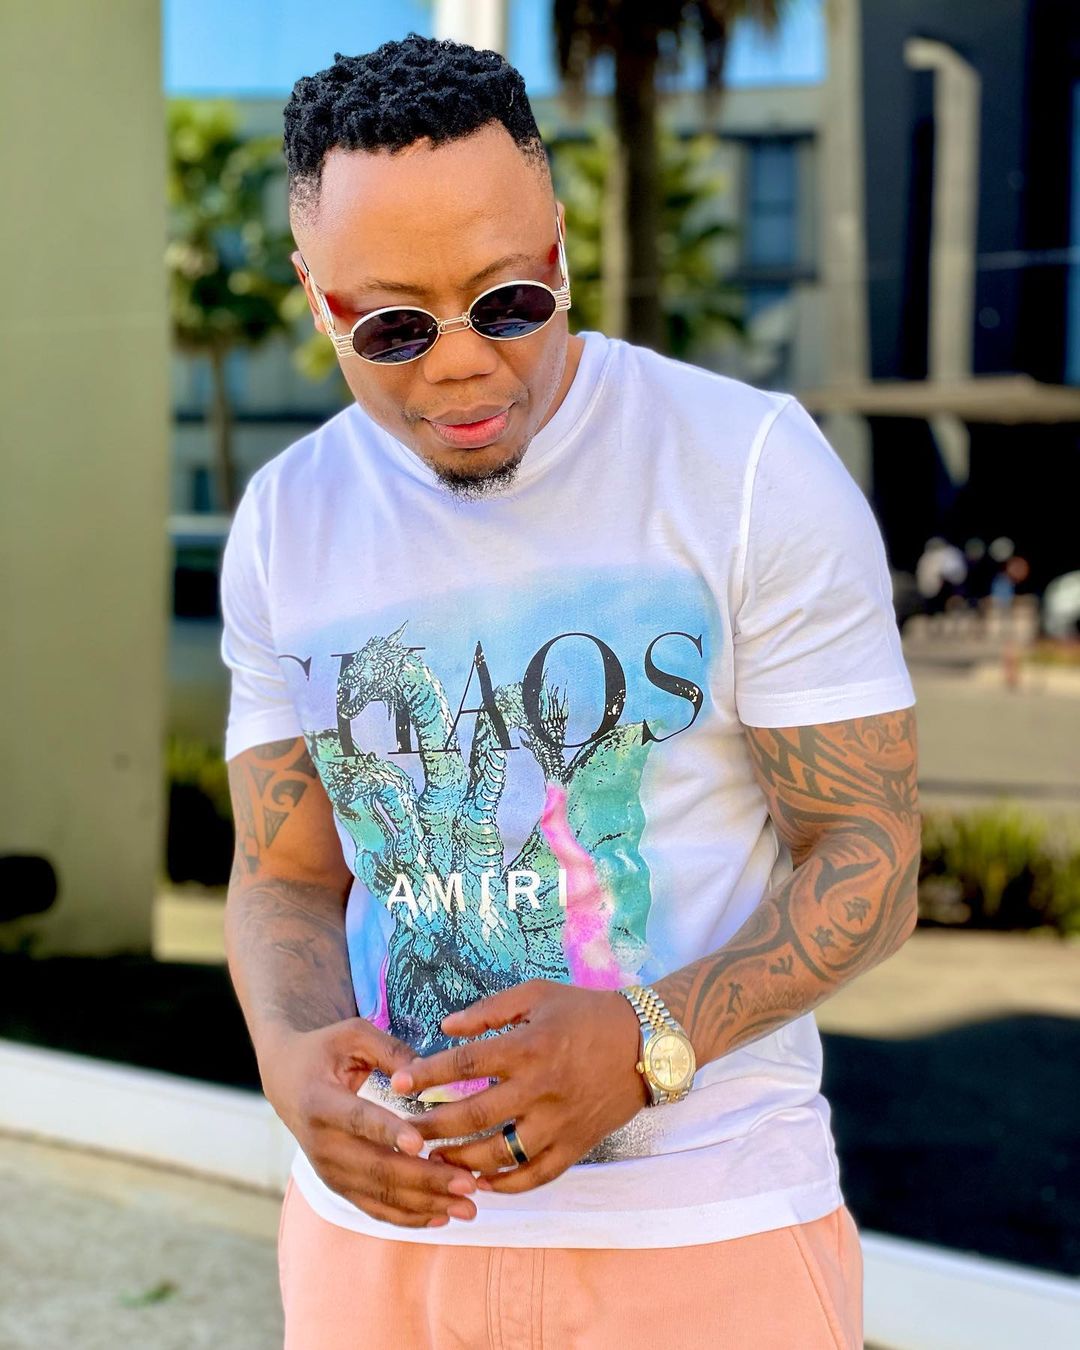 DJ Tira’s contribution to SA music questioned